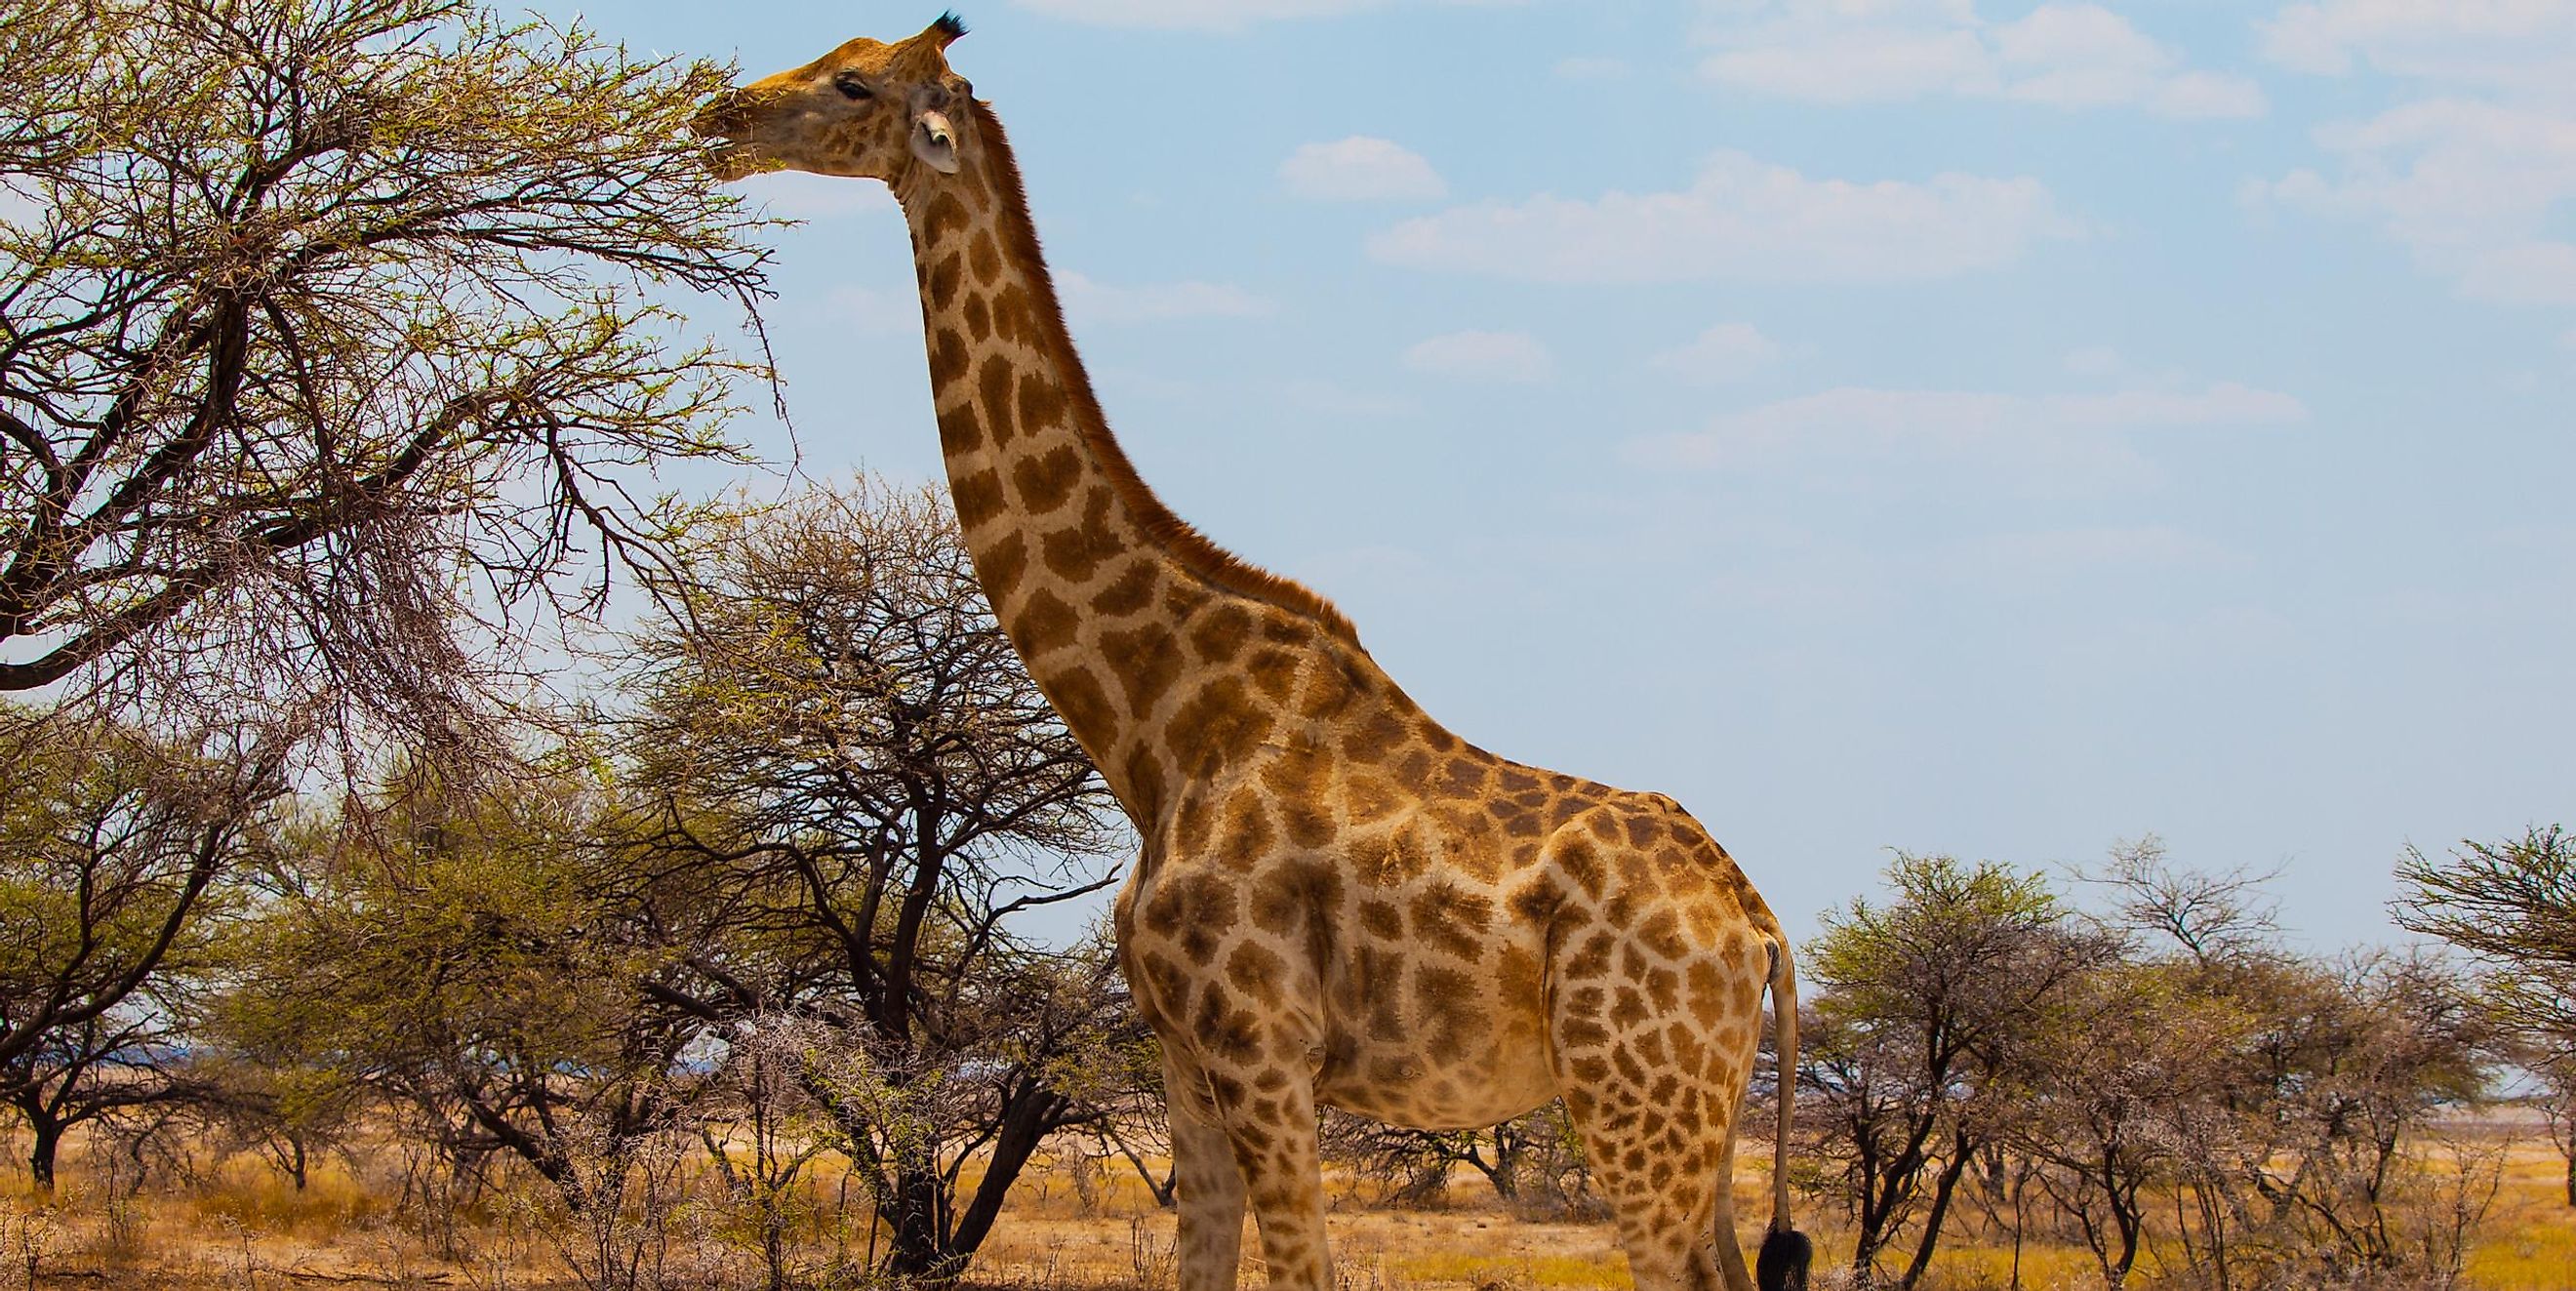 Where do giraffes come from?